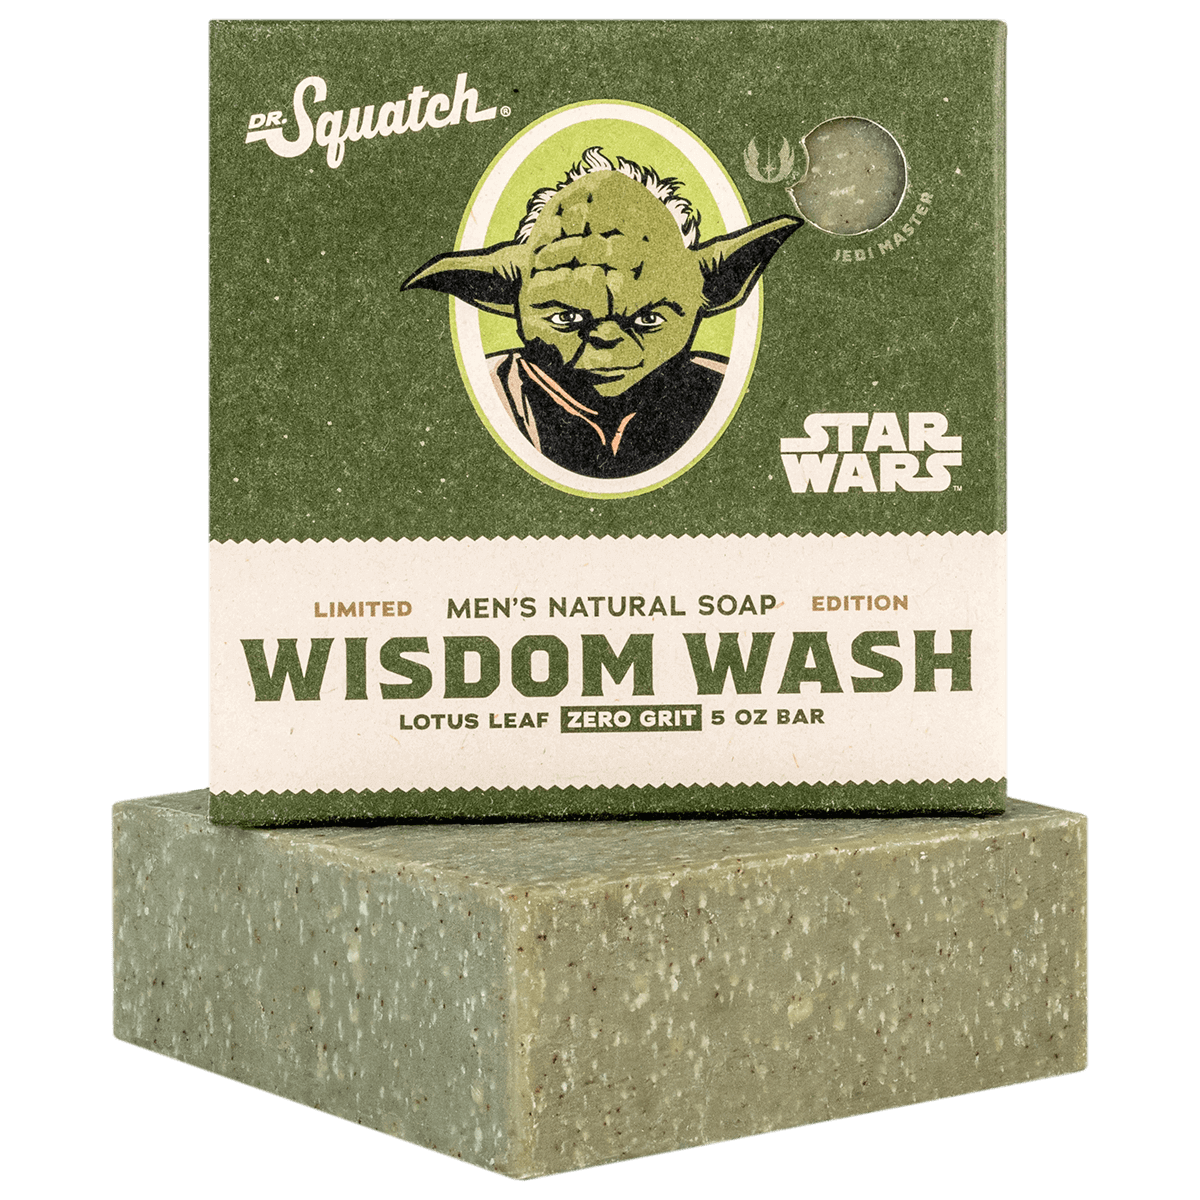 Dr Squatch Soap - Star Wars Edition: Collection I – Oak City